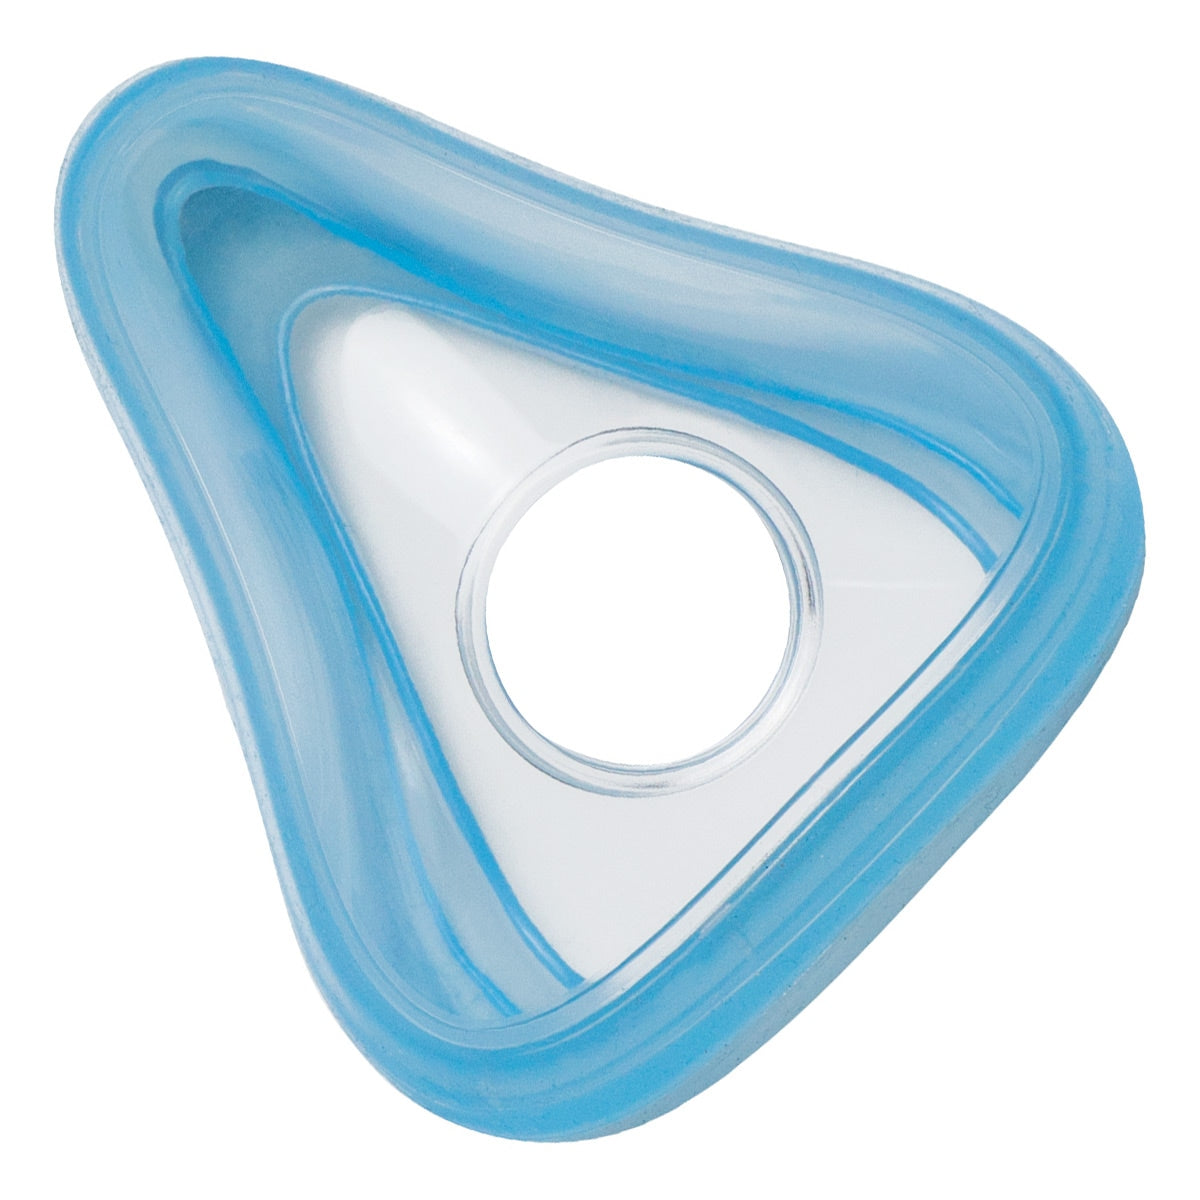 Full Face Cushion (Gel) for Amara CPAP/BiPAP Masks